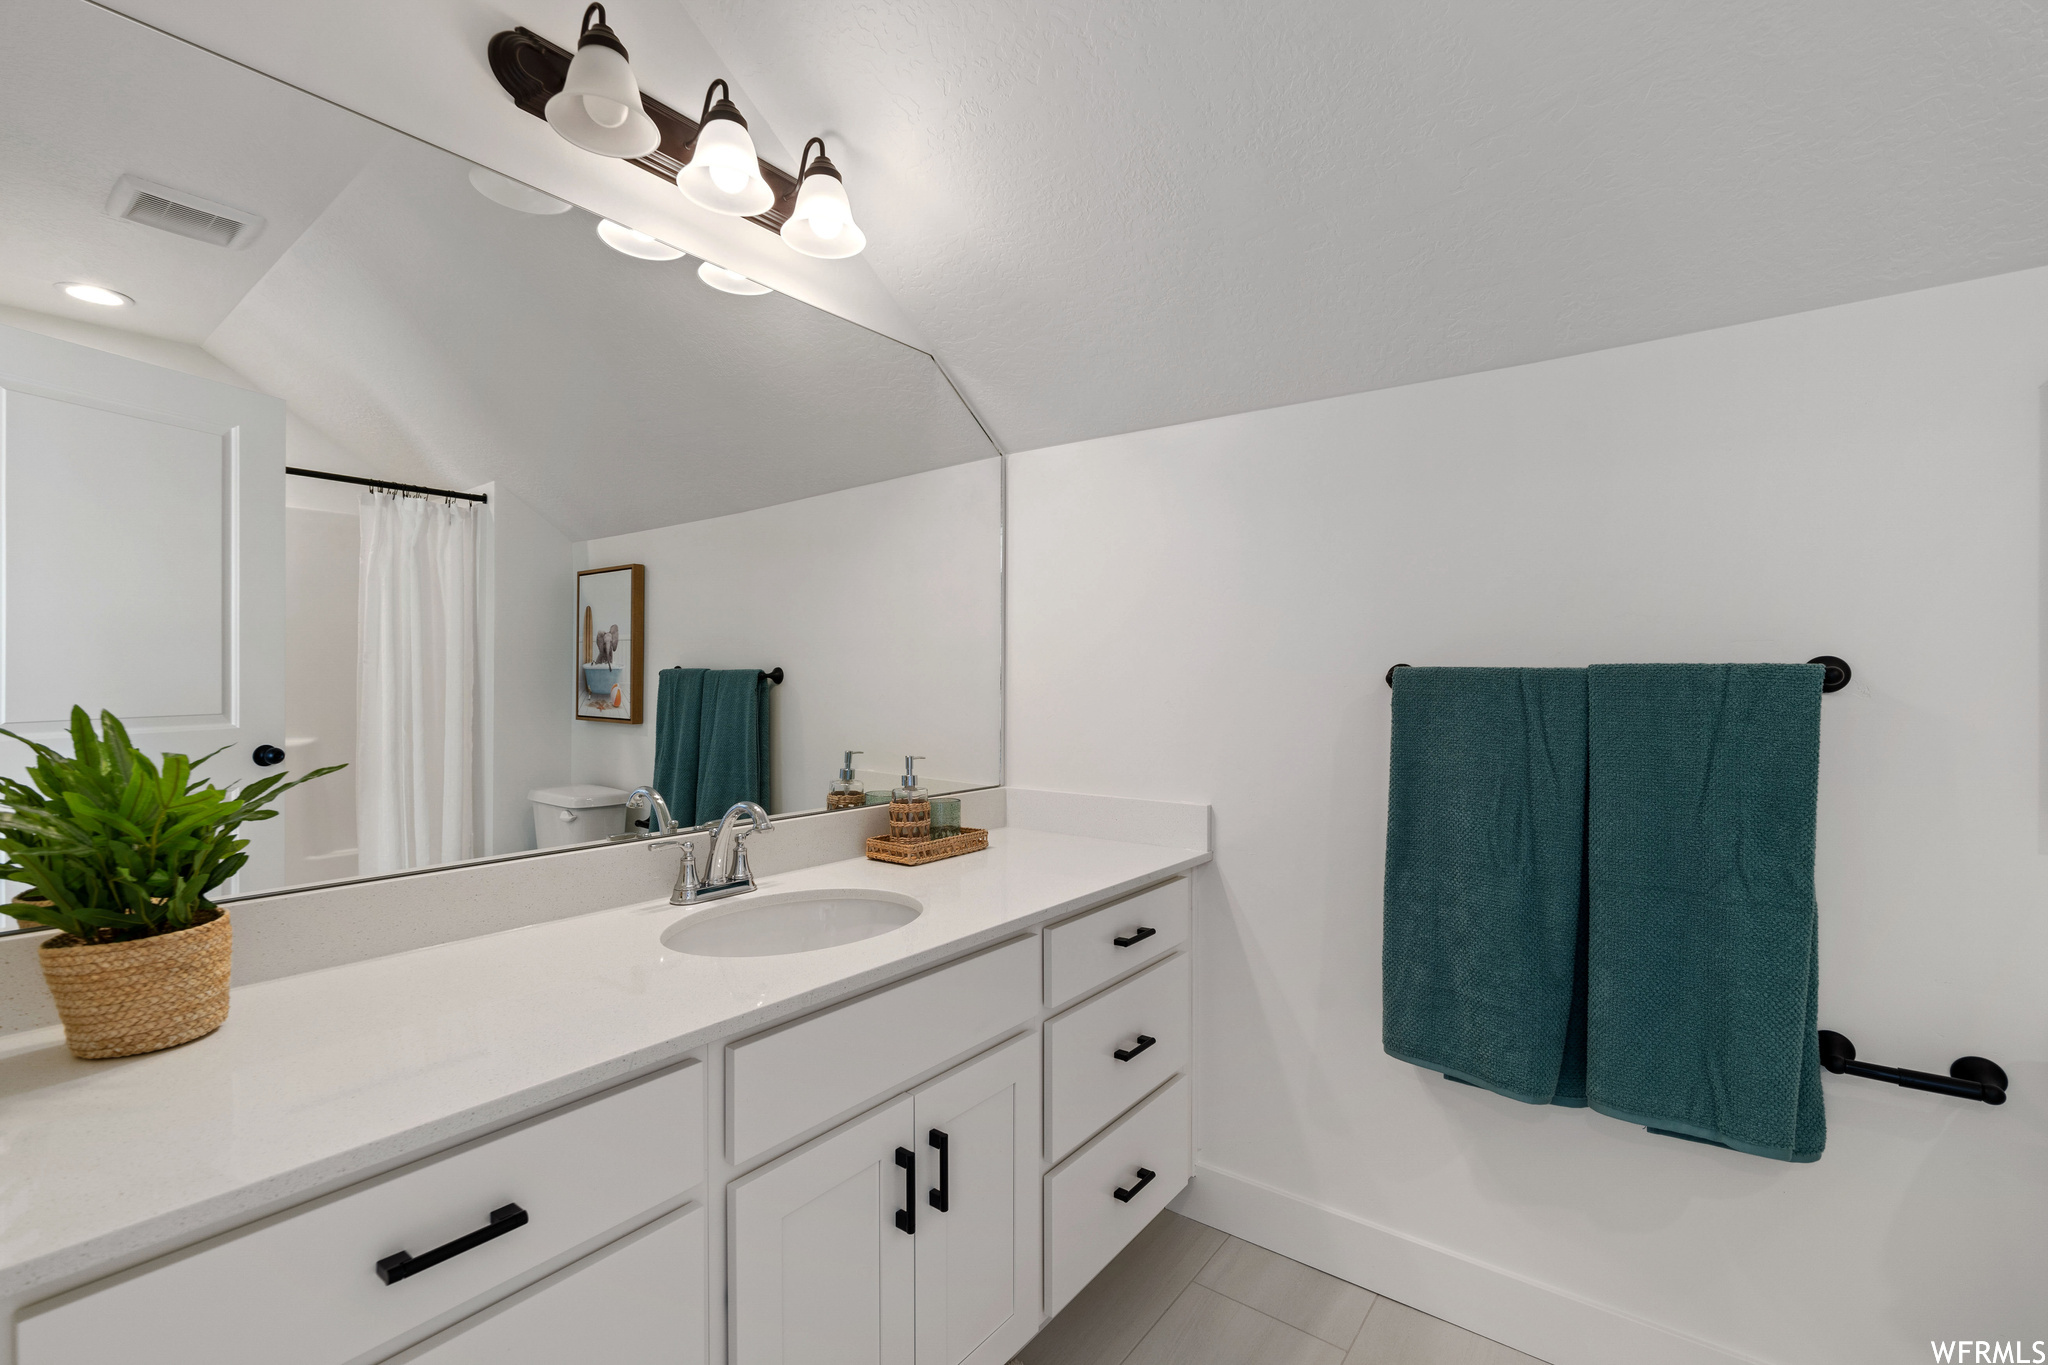 Bathroom featuring lofted ceiling, oversized vanity, toilet, and tile flooring